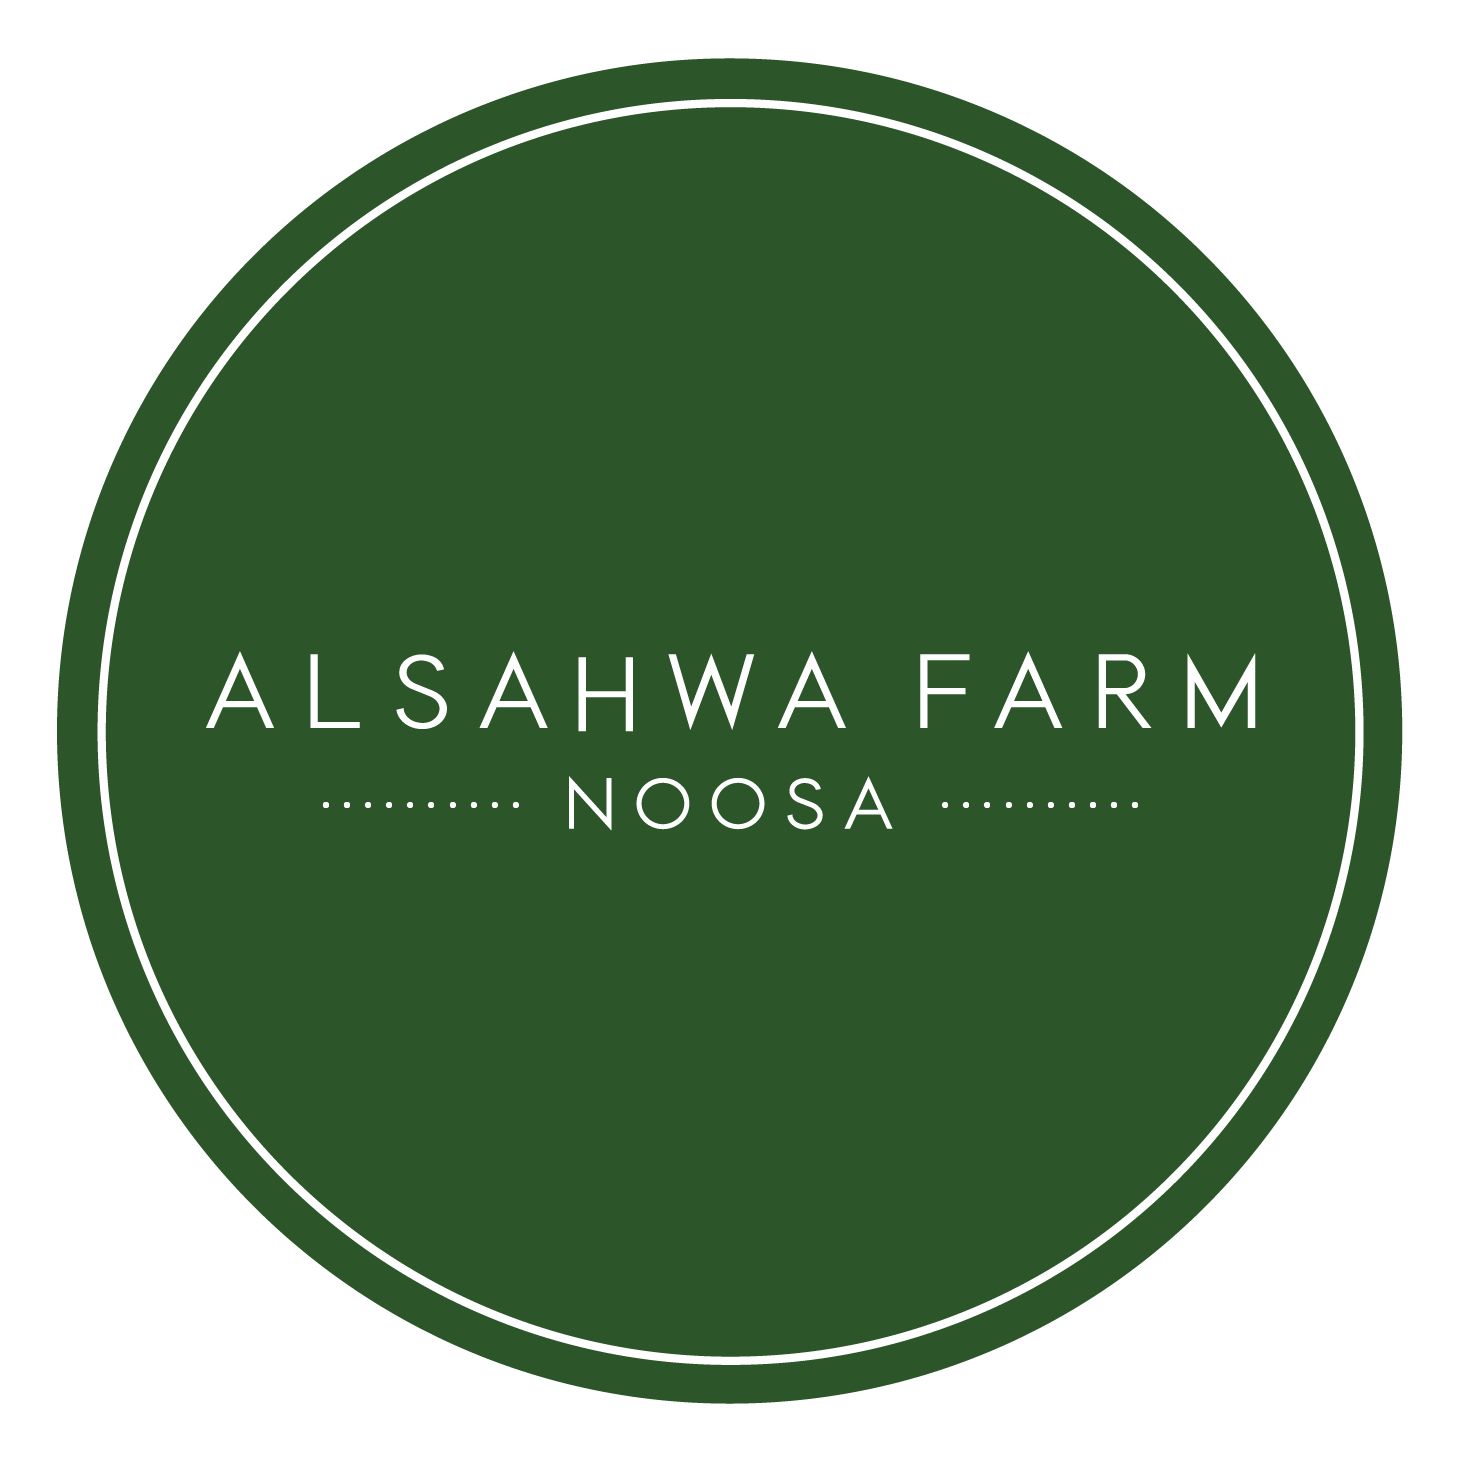 Alsahwa Farm